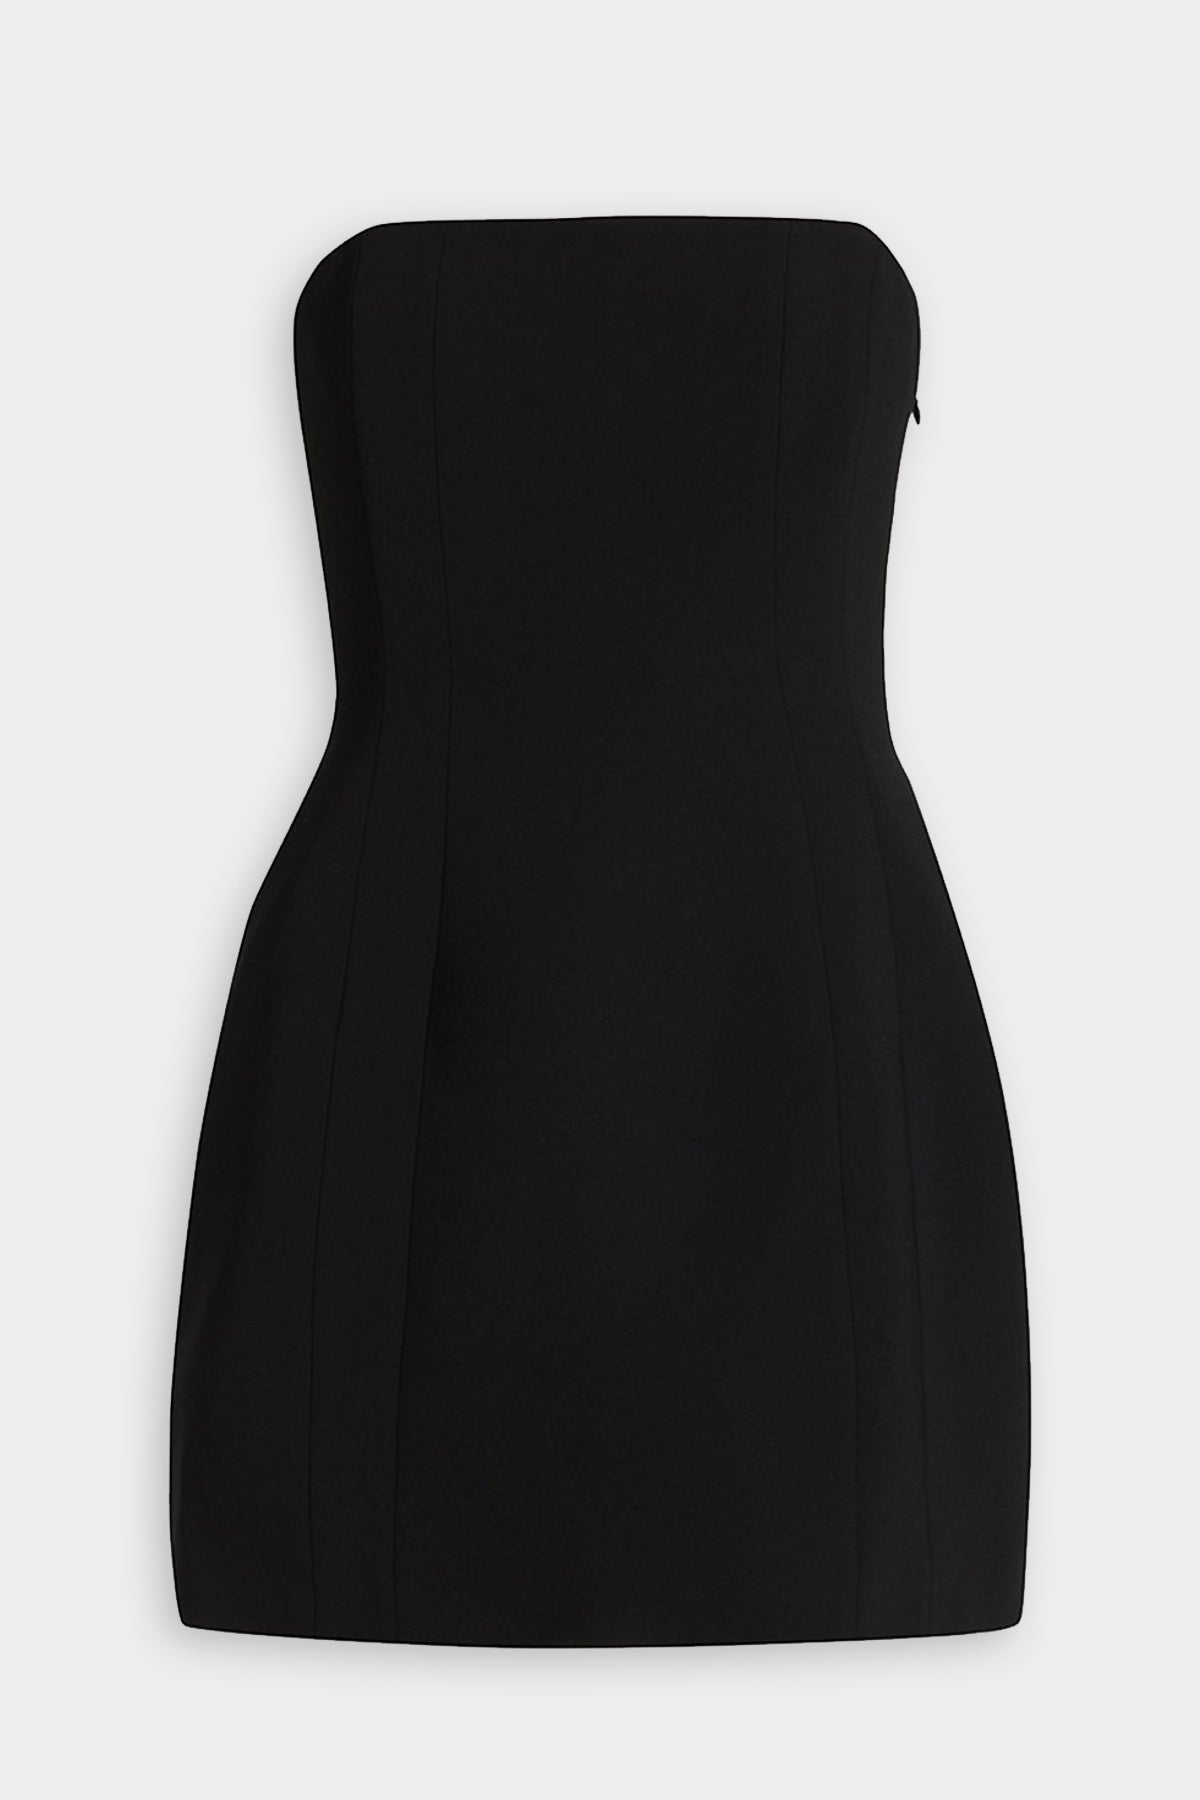 Elsie Strapless Mini Dress in Black - shop-olivia.com